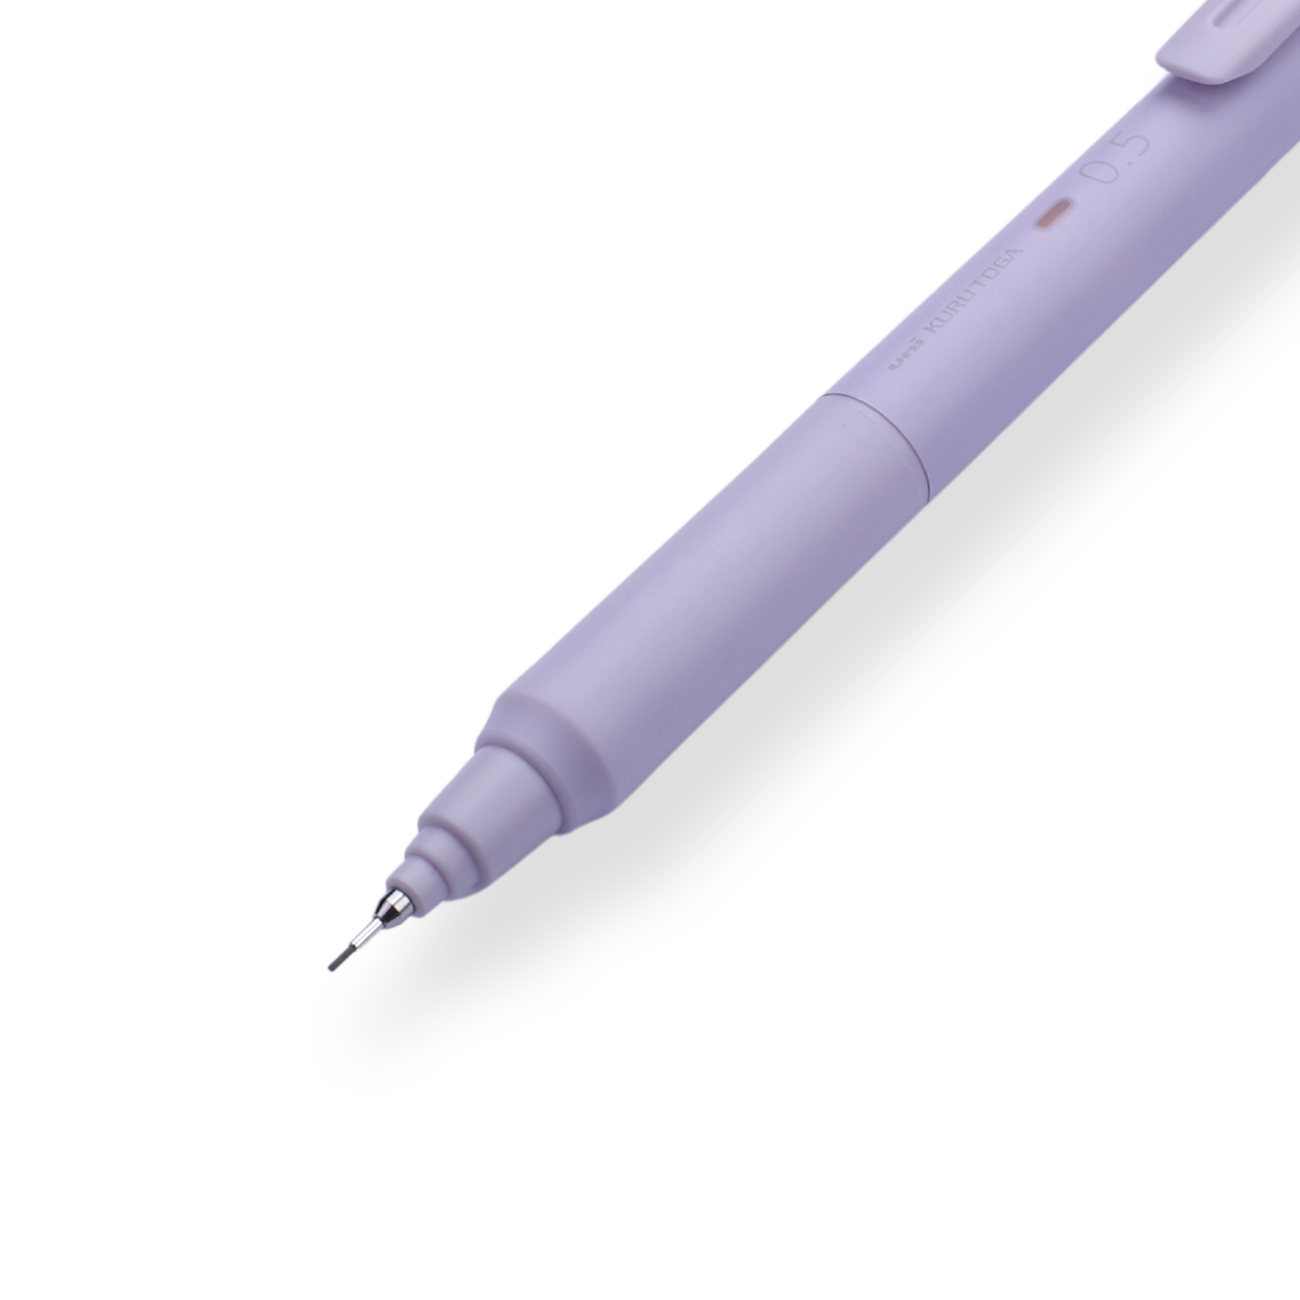 Uni Kurutoga KS Mechanical Pencil 0.5mm - Purple - Stationery Pal